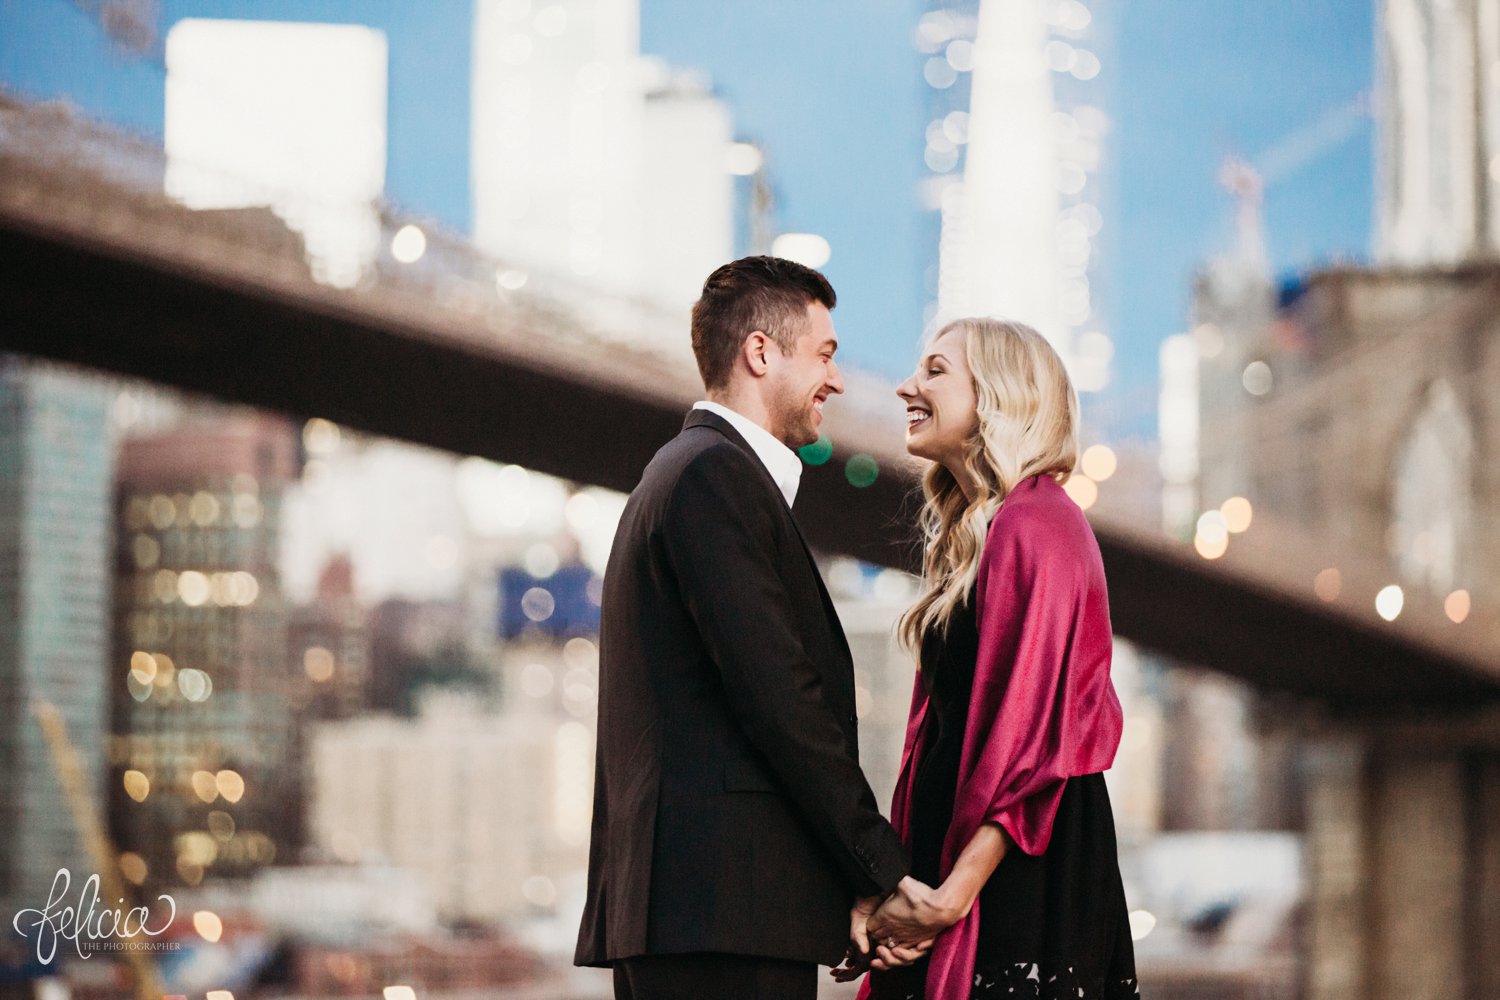 images by feliciathephotographer.com | destination wedding photographer | engagement | new york city | brooklyn bridge | skyline | formal | classic | true love | romantic | cuddles | pearls | diamond ring | urban | joyful | 